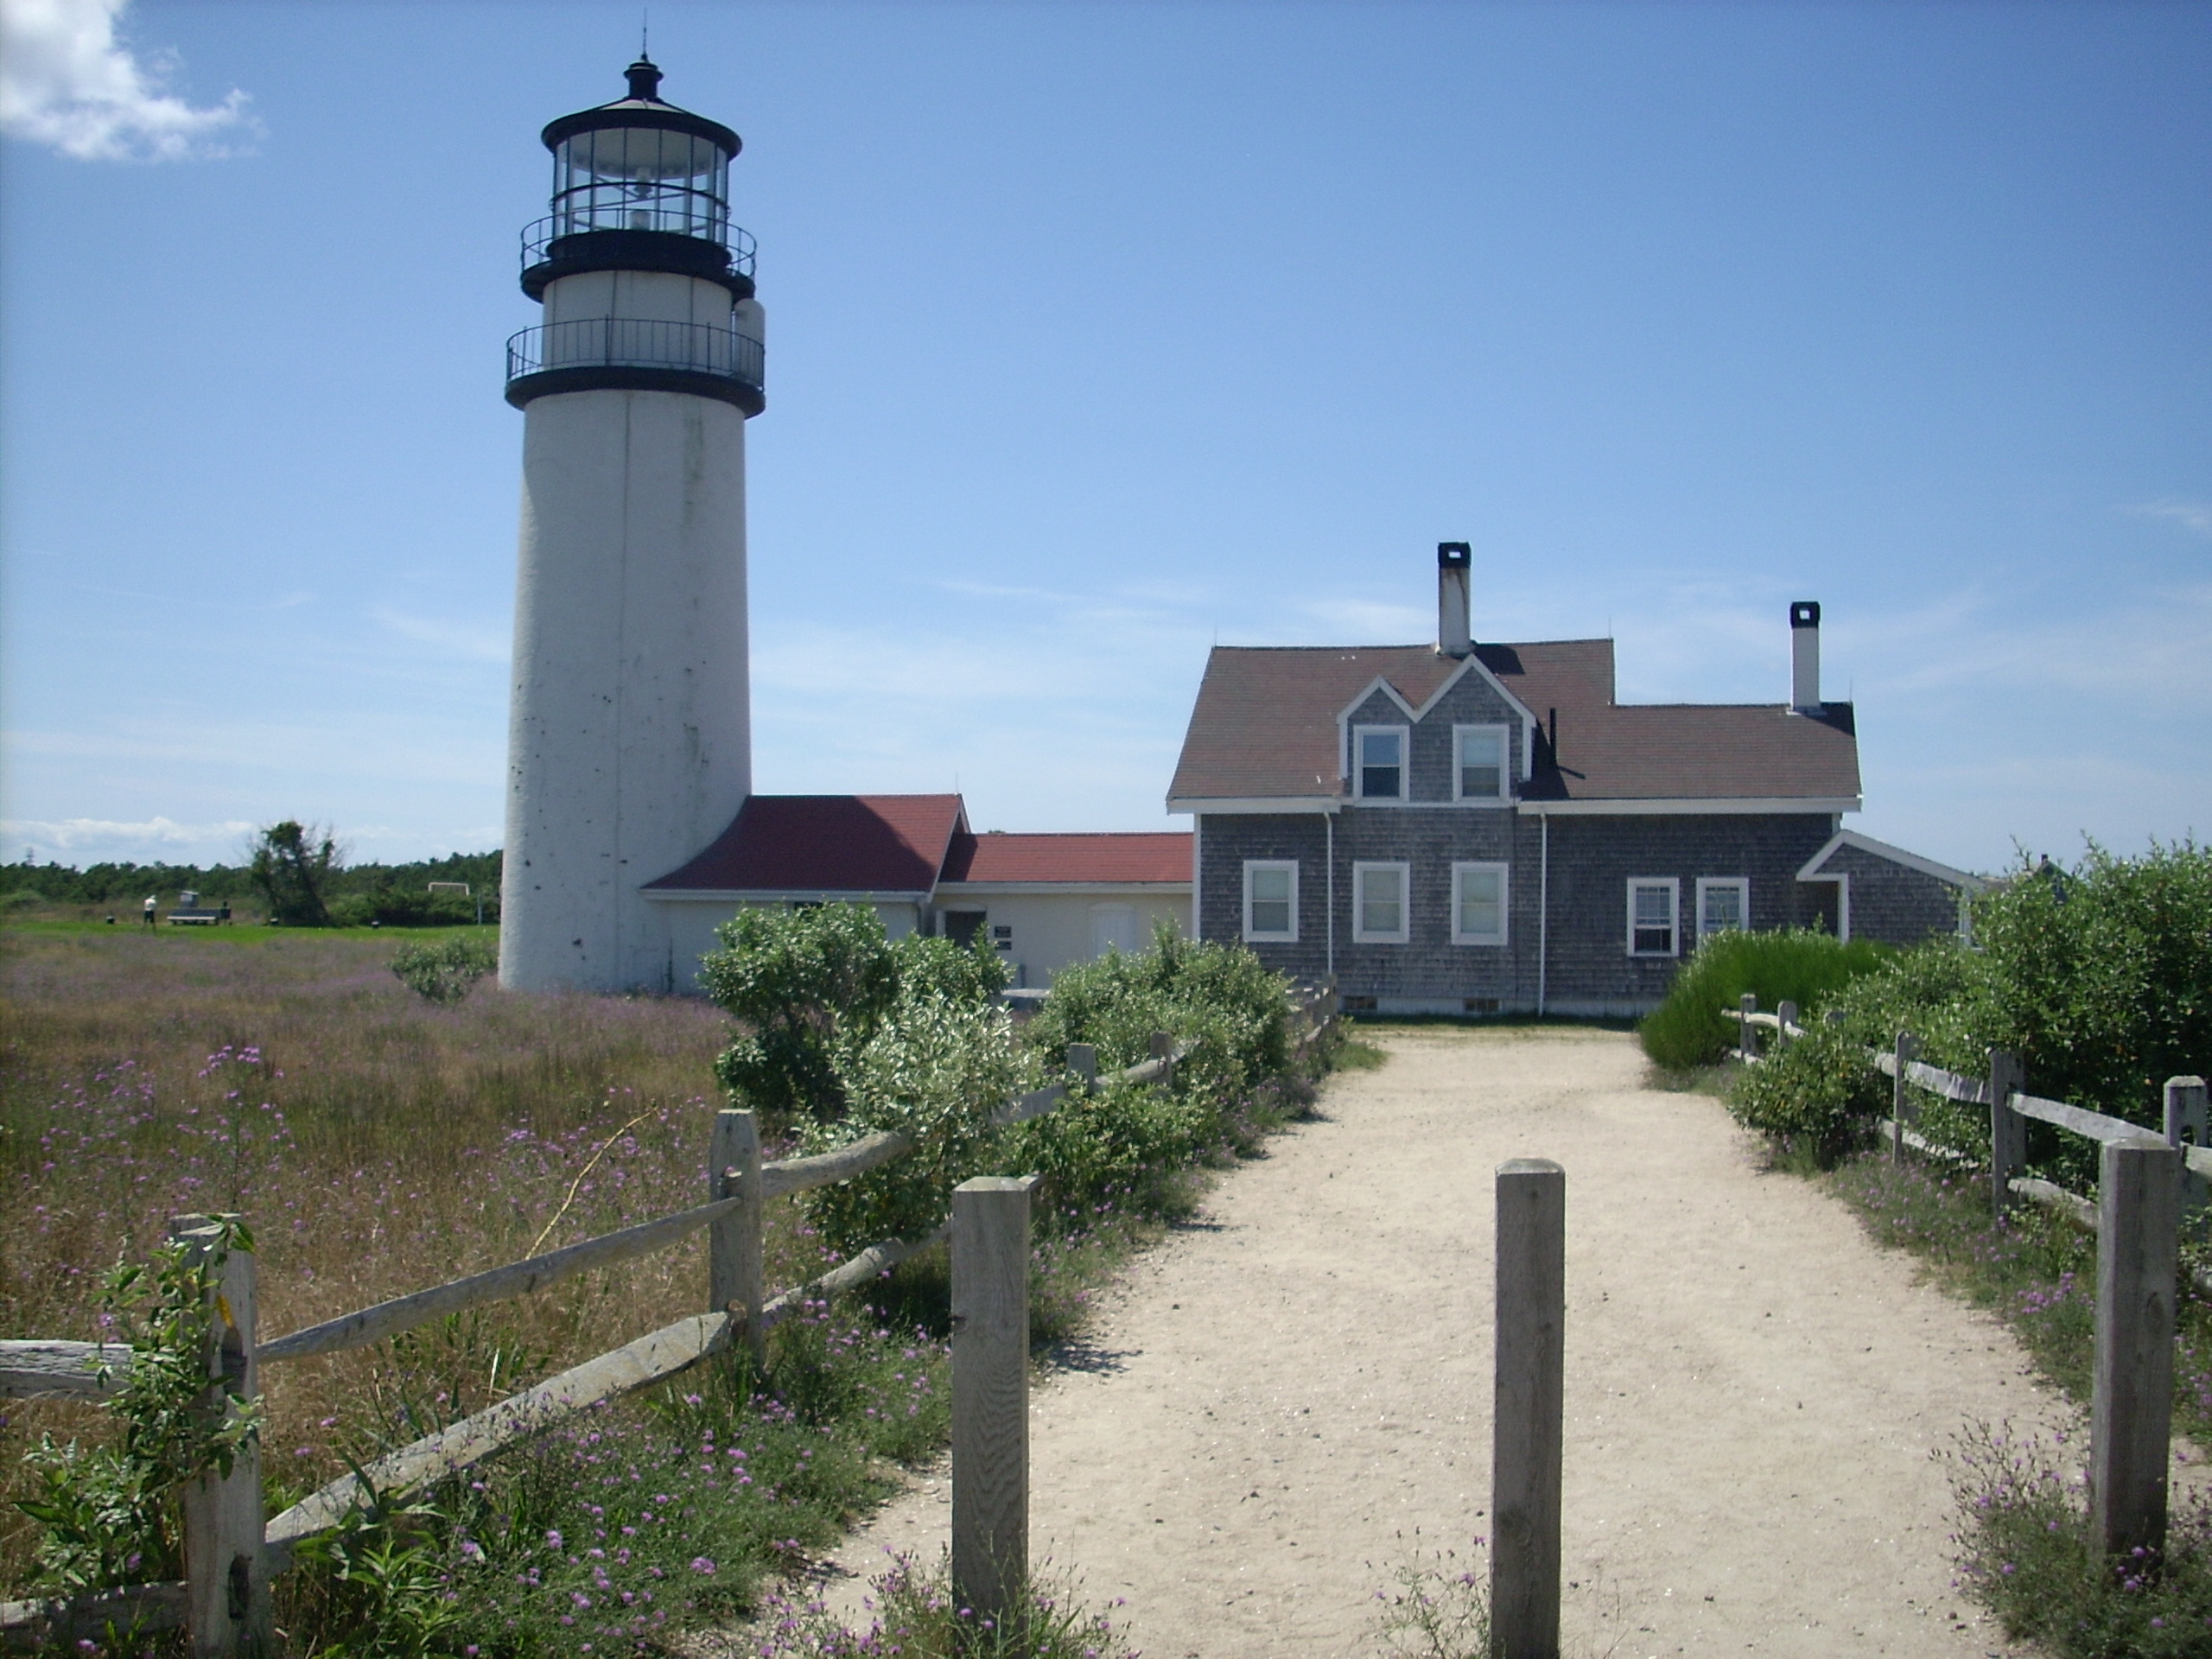 A lighthouse on Cape Cod National Seashore. Photo by Dan Perelman via Flickr.